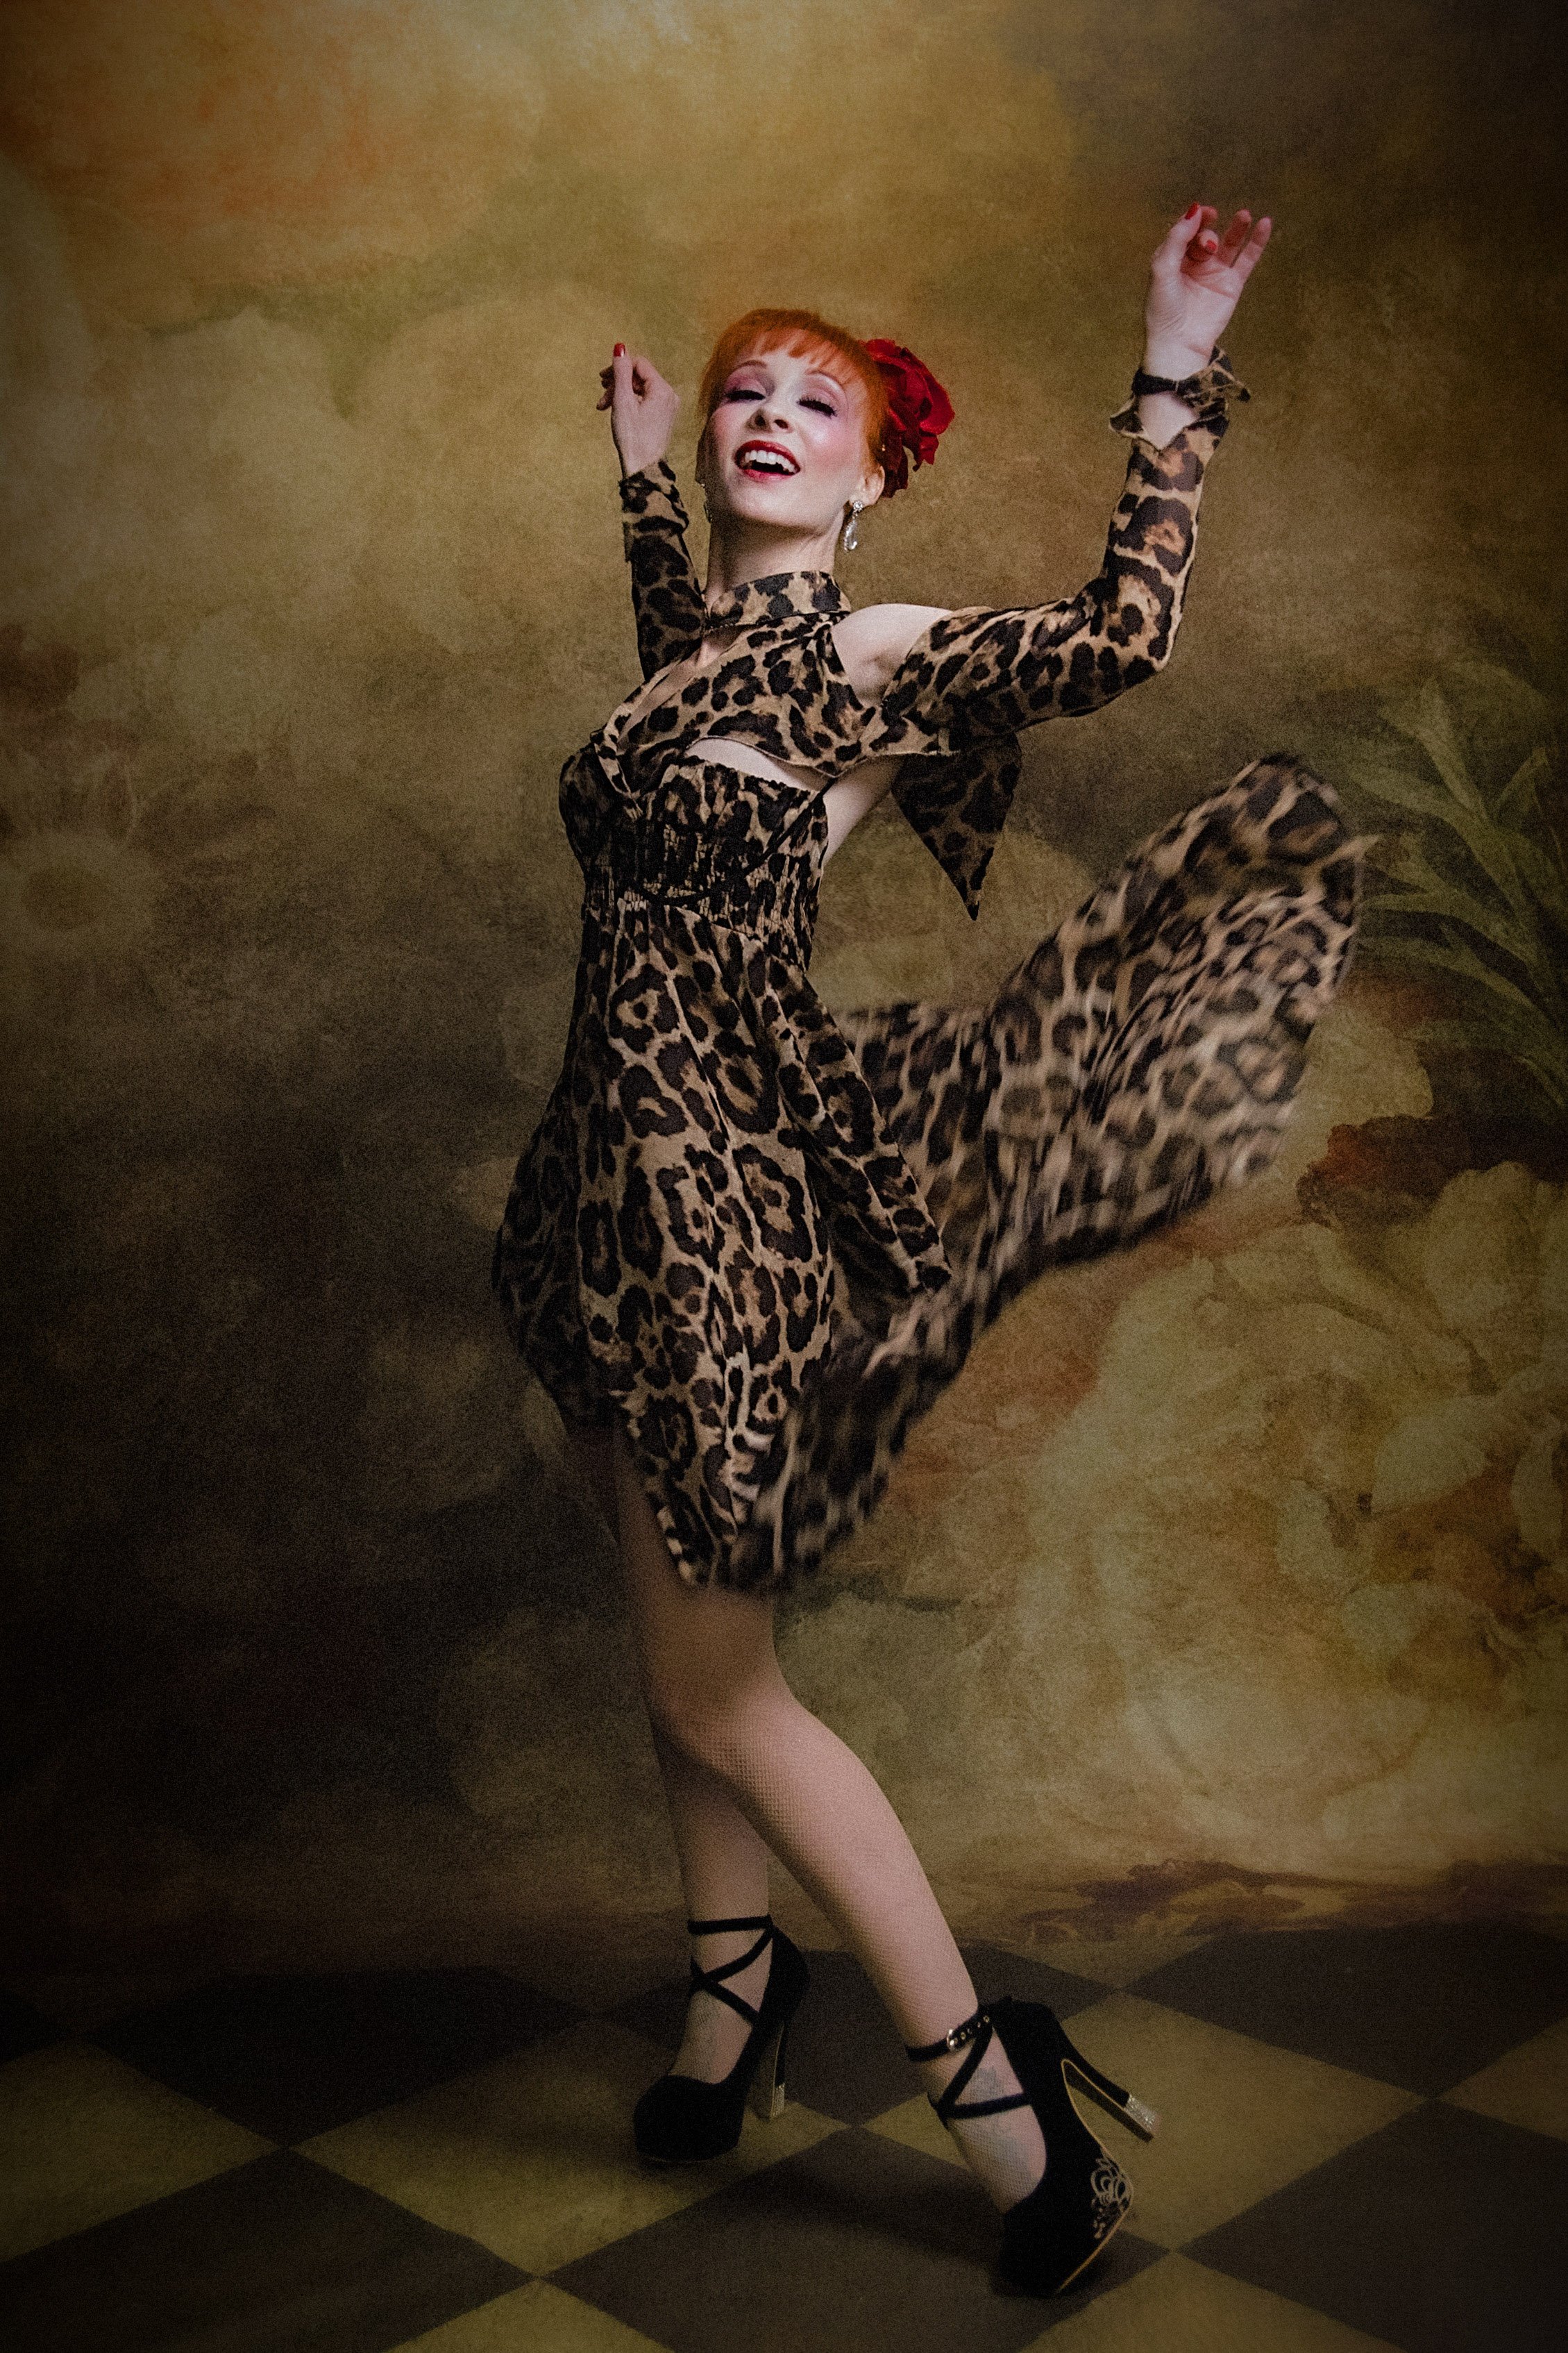 Dress in motion leopard print fun dress Burlesque performer artist photography Grass Valley Studio Portraits